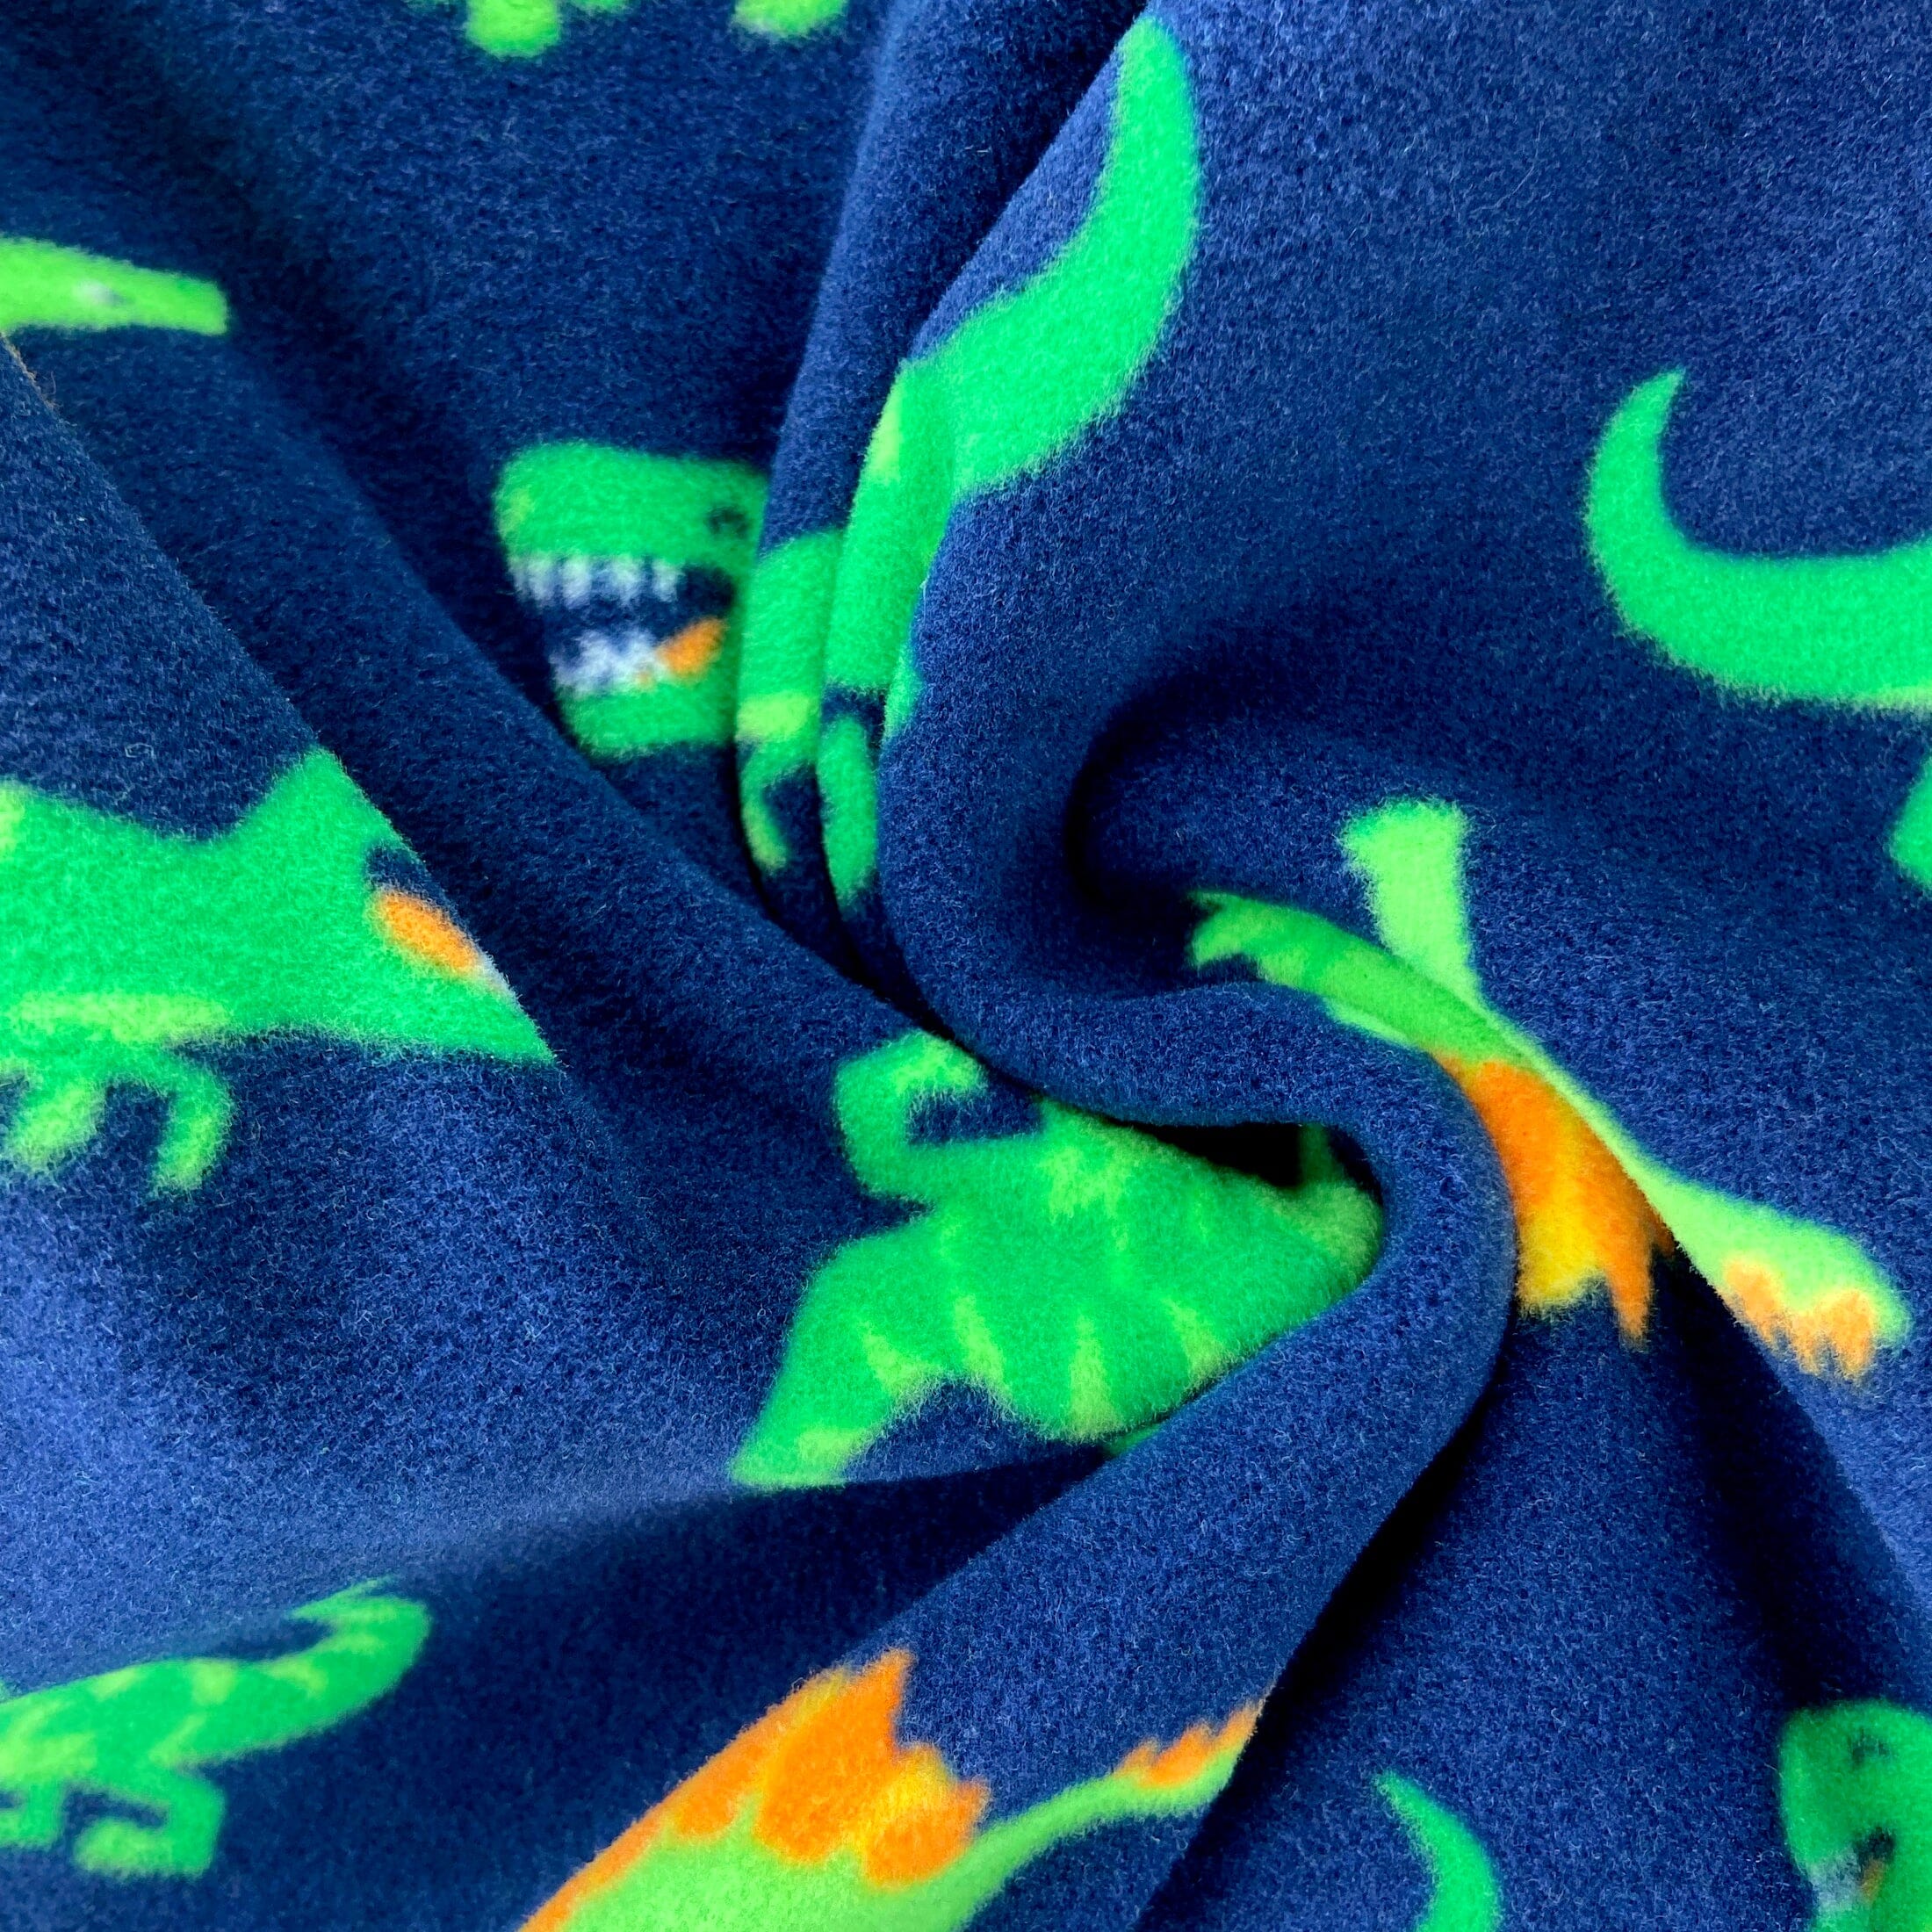 Men's Smiling Dinosaur Novelty Print Ultra-Soft Fleece Pajama PJ Pants